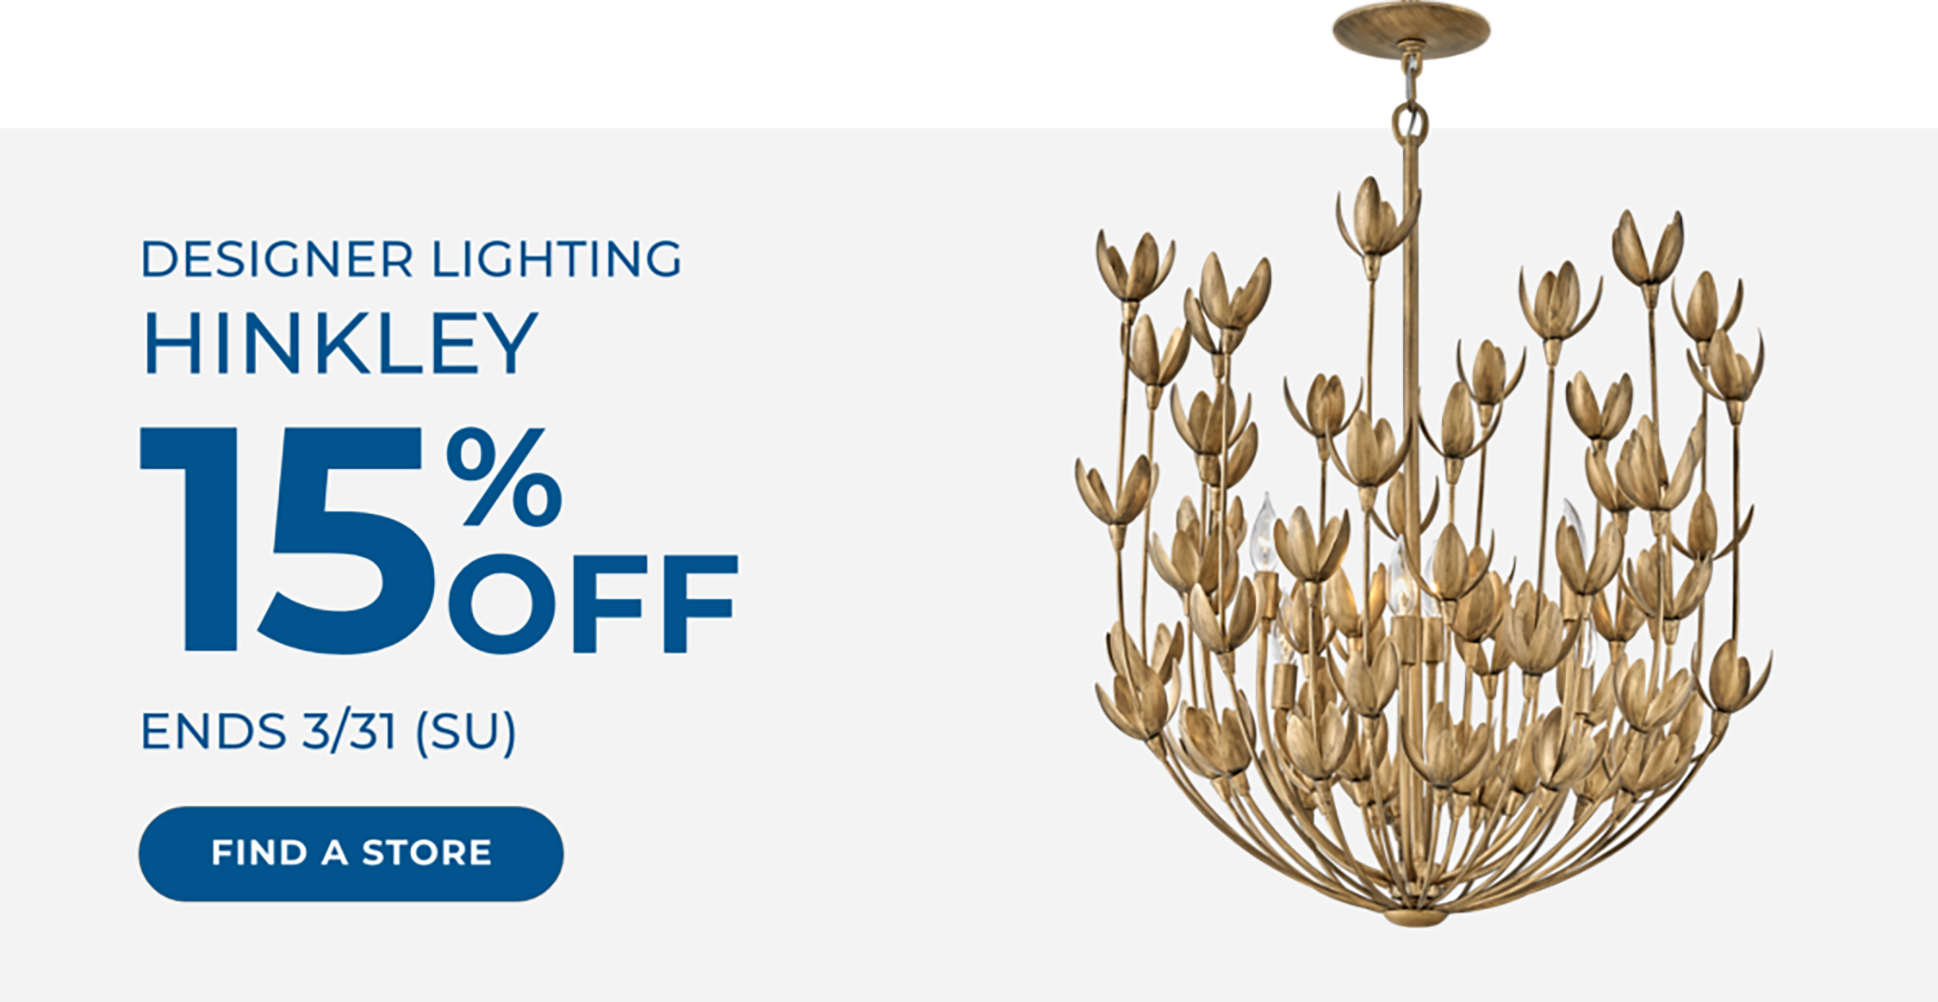 Save 15% on designer lighting from Hinkley. Ends 3/31.